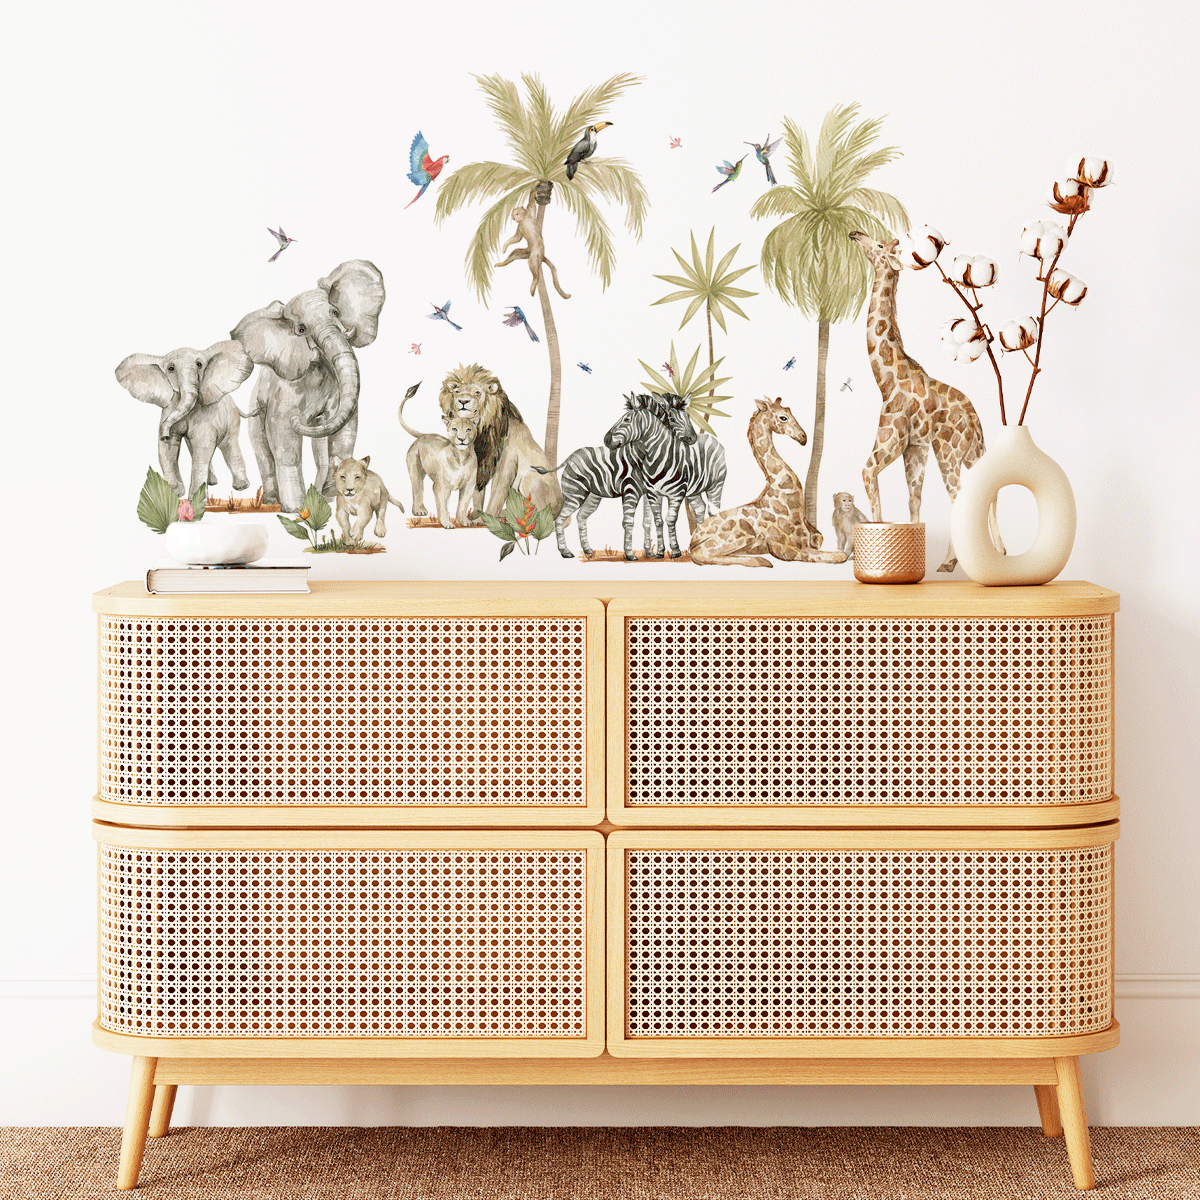 Jungle wall stickers - Tropical safari - giraffes